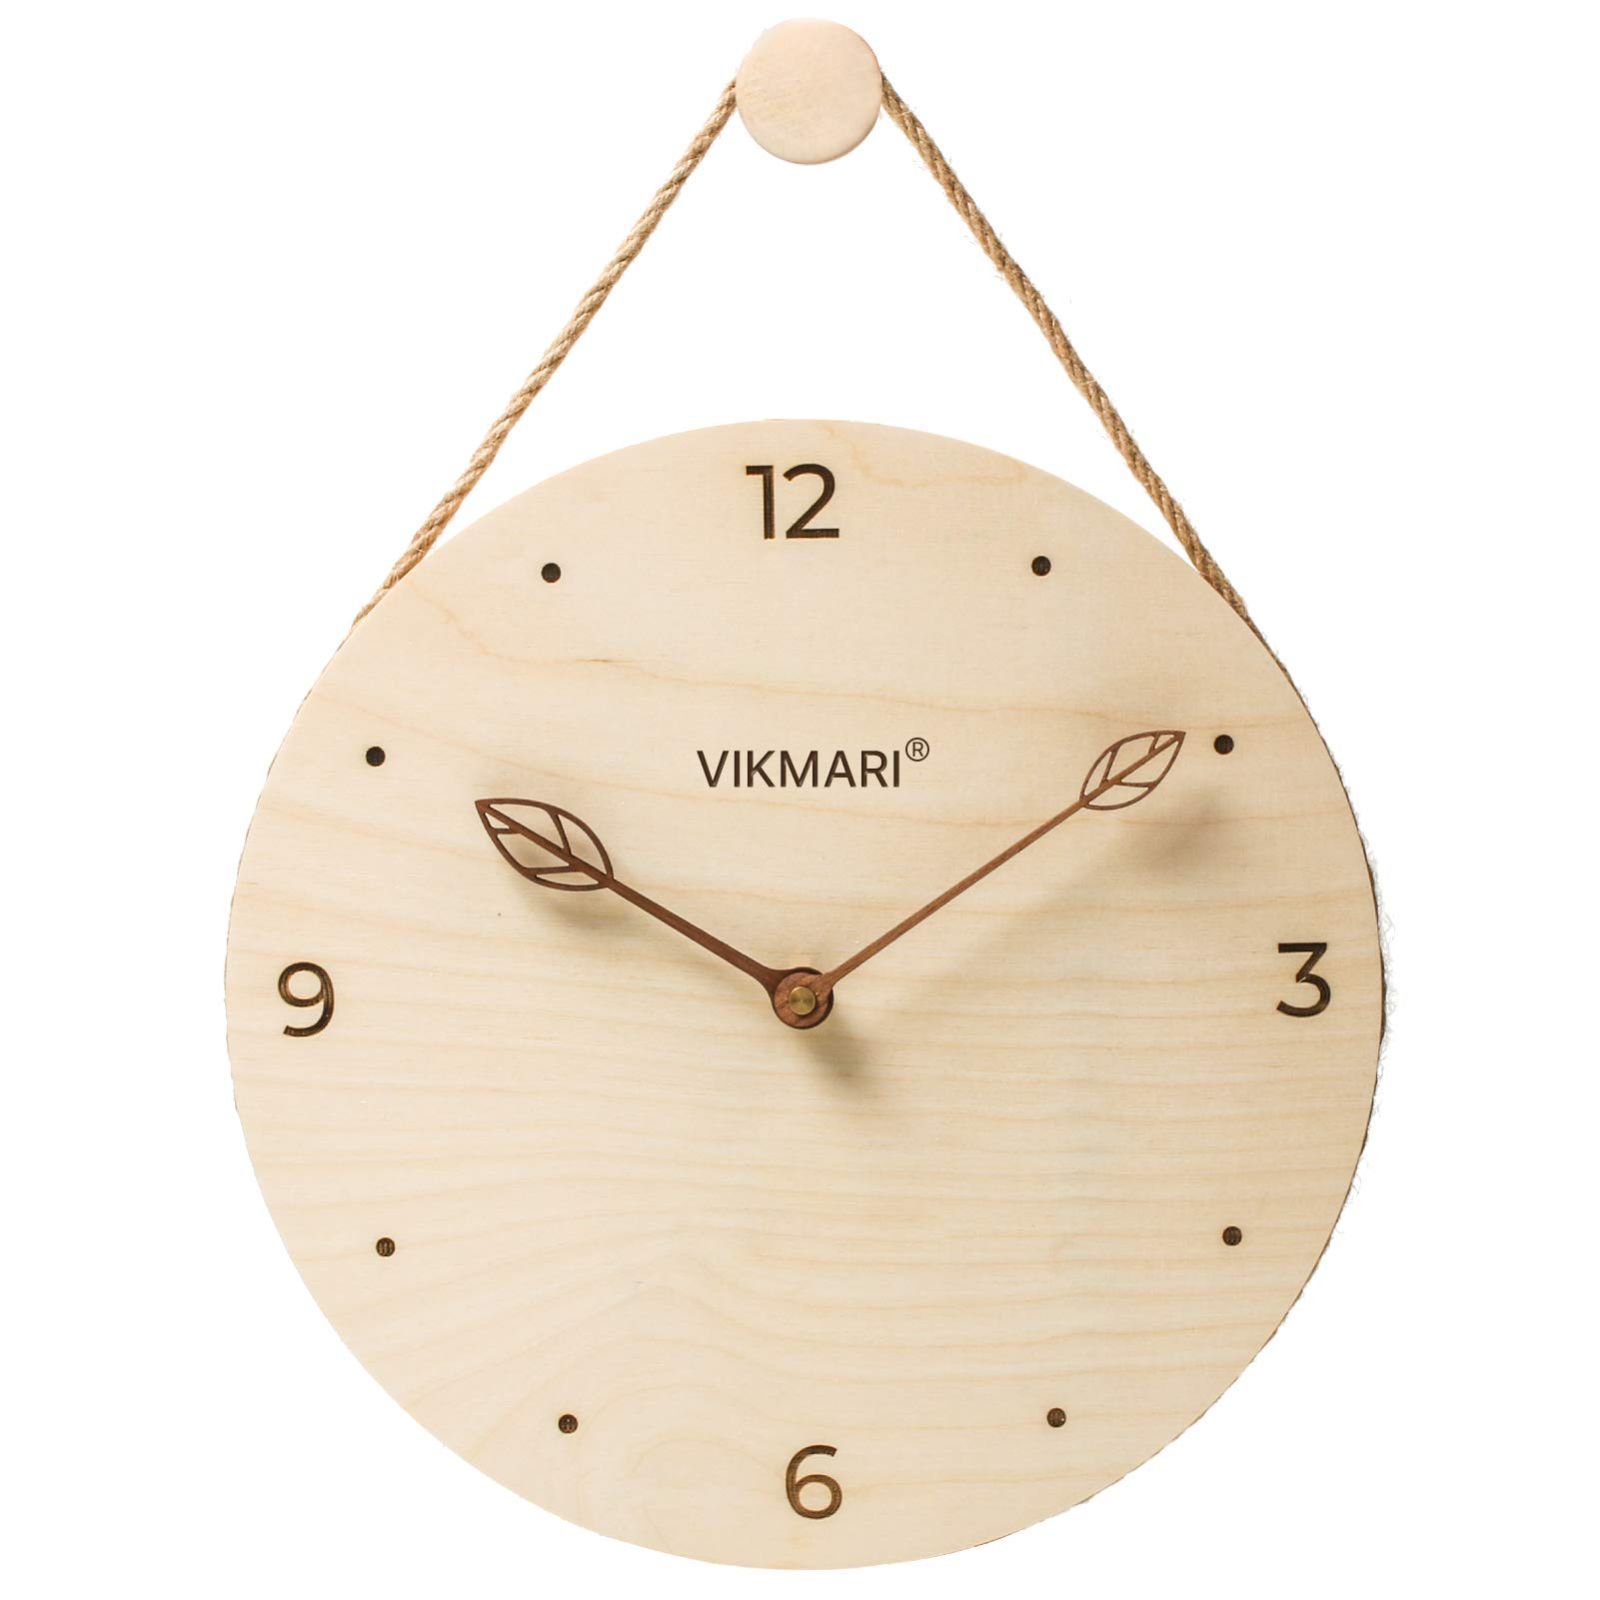 VIKMARI 北欧風 天然木 円形 壁掛け時計 木製文字盤 彫刻したインデックス アラビア数字 木製枝型指針 静音 連続秒針 非電波 ウォールクロック